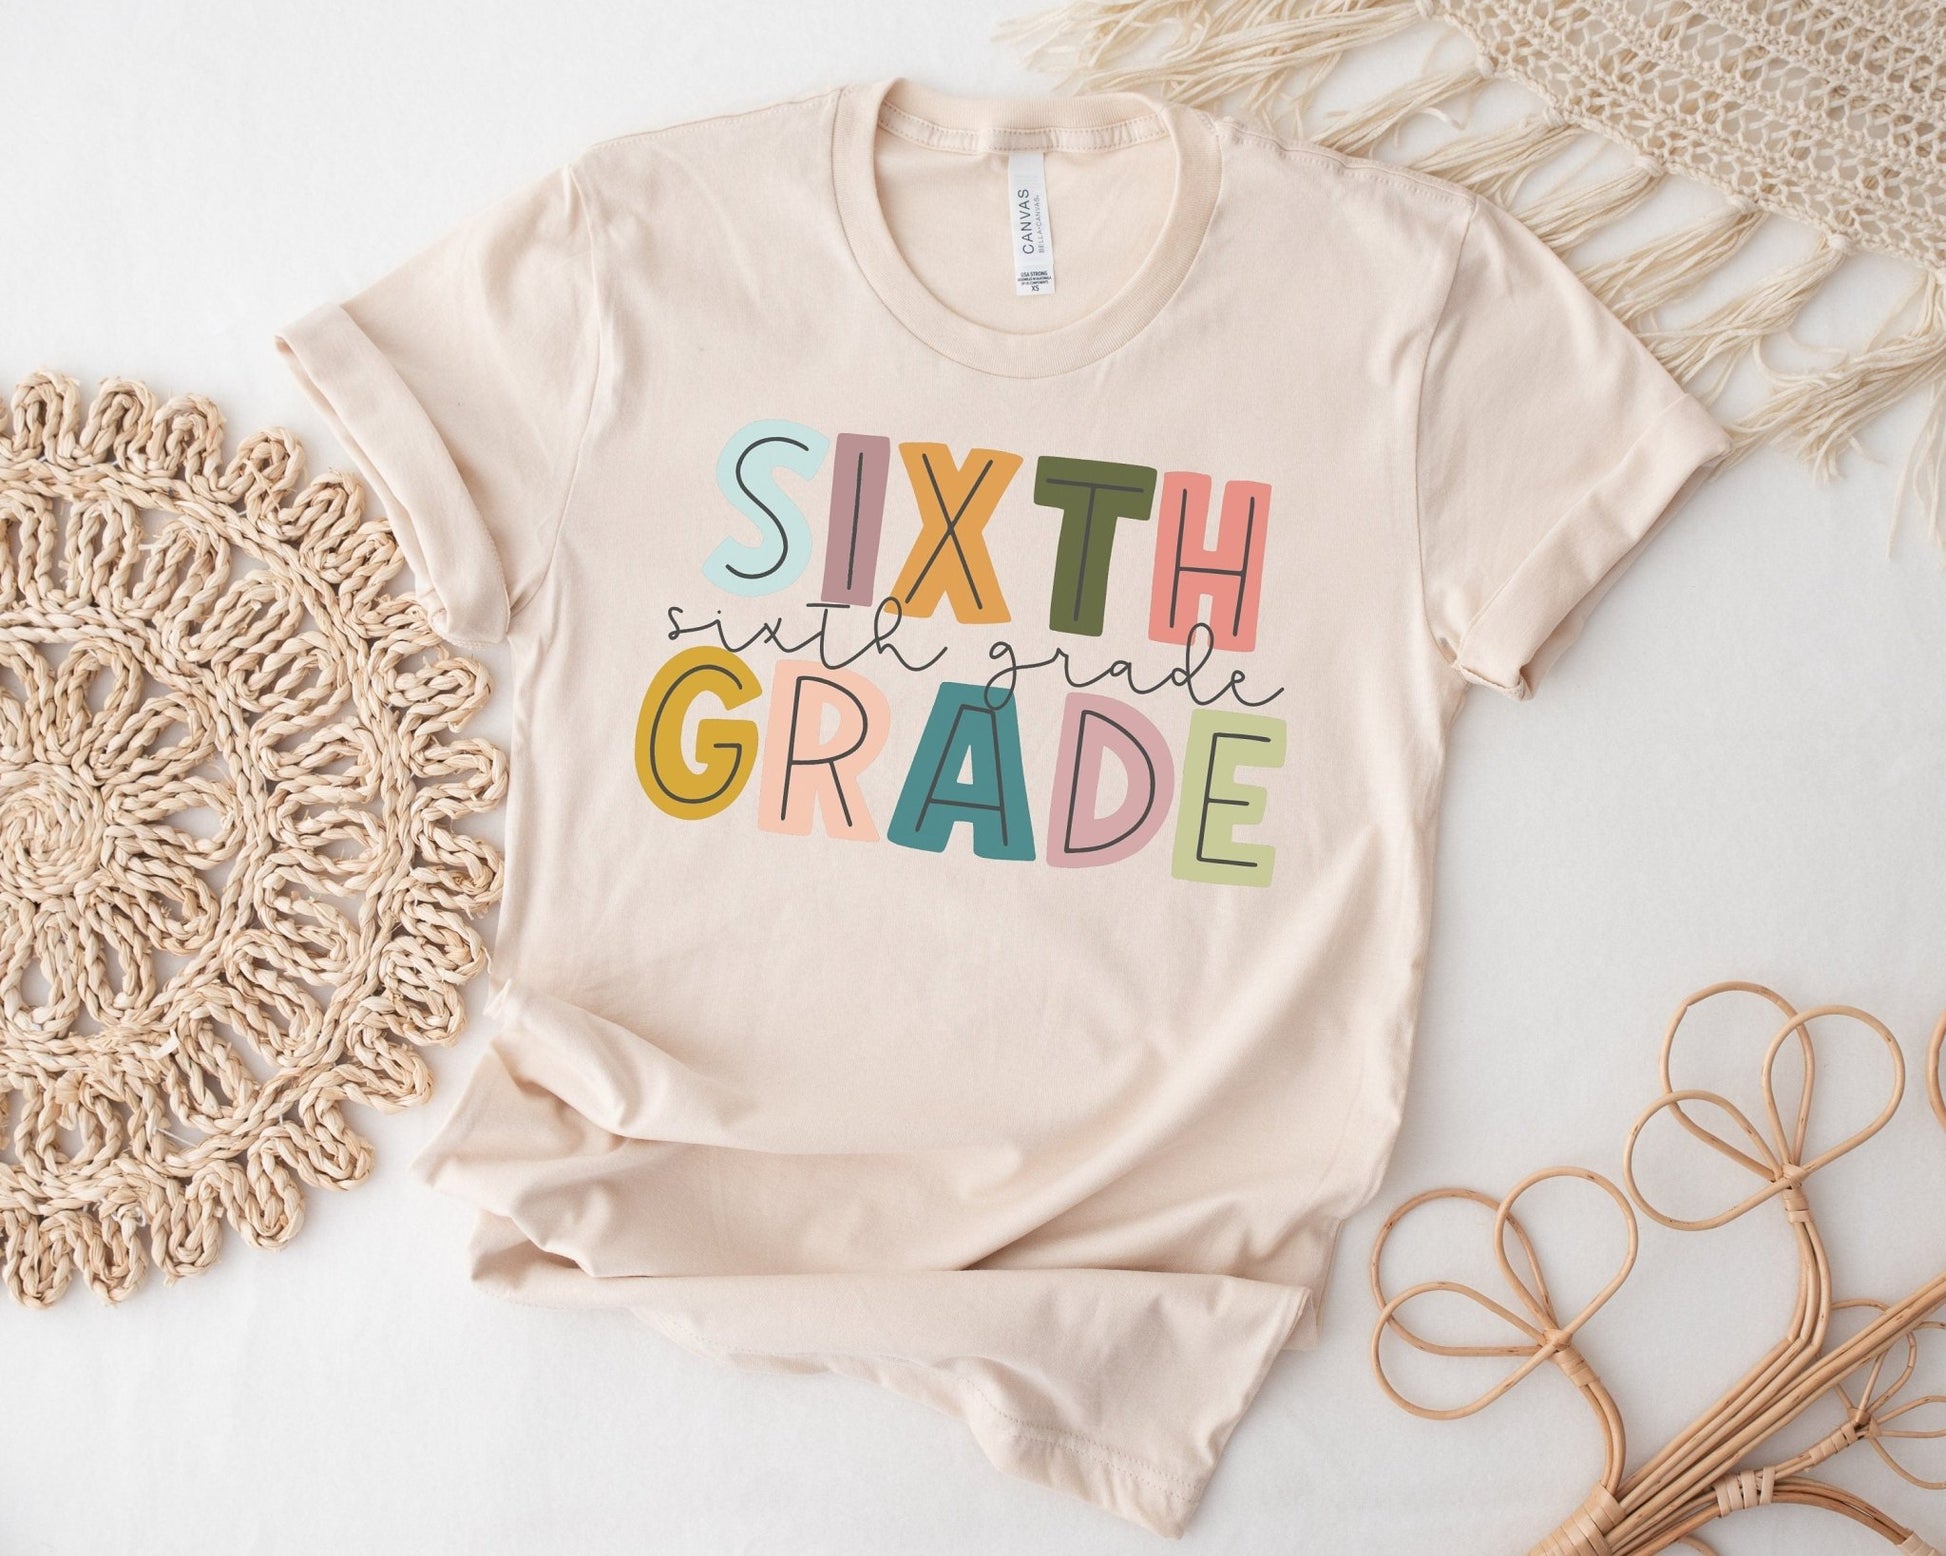 Classroom School Shirt Girls Size S/6X